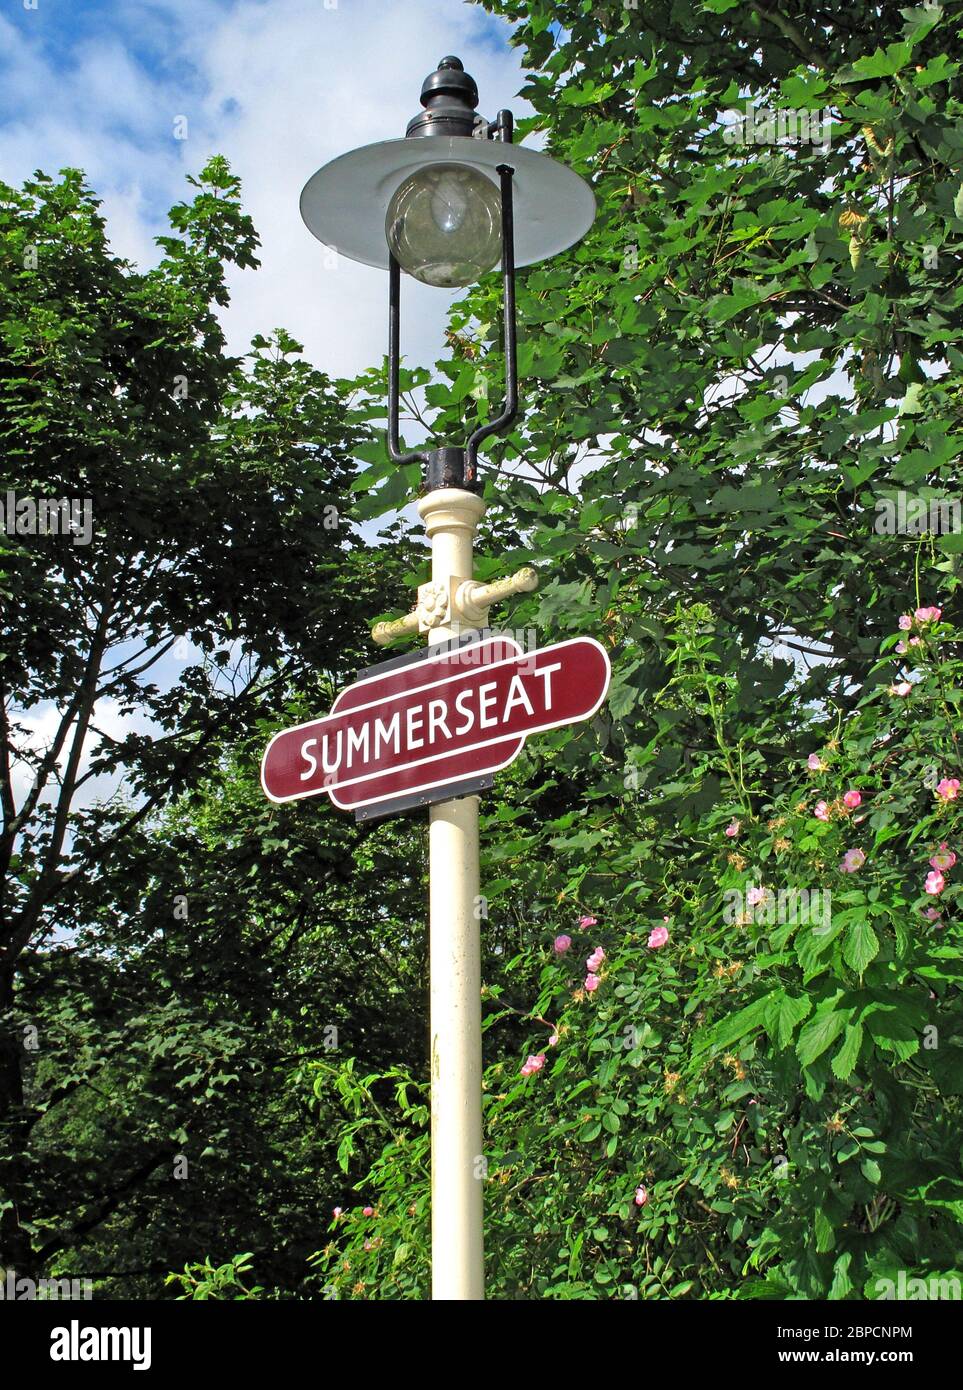 Summerseat Station Sign on a lamp, Lancashire, England, UK Stock Photo